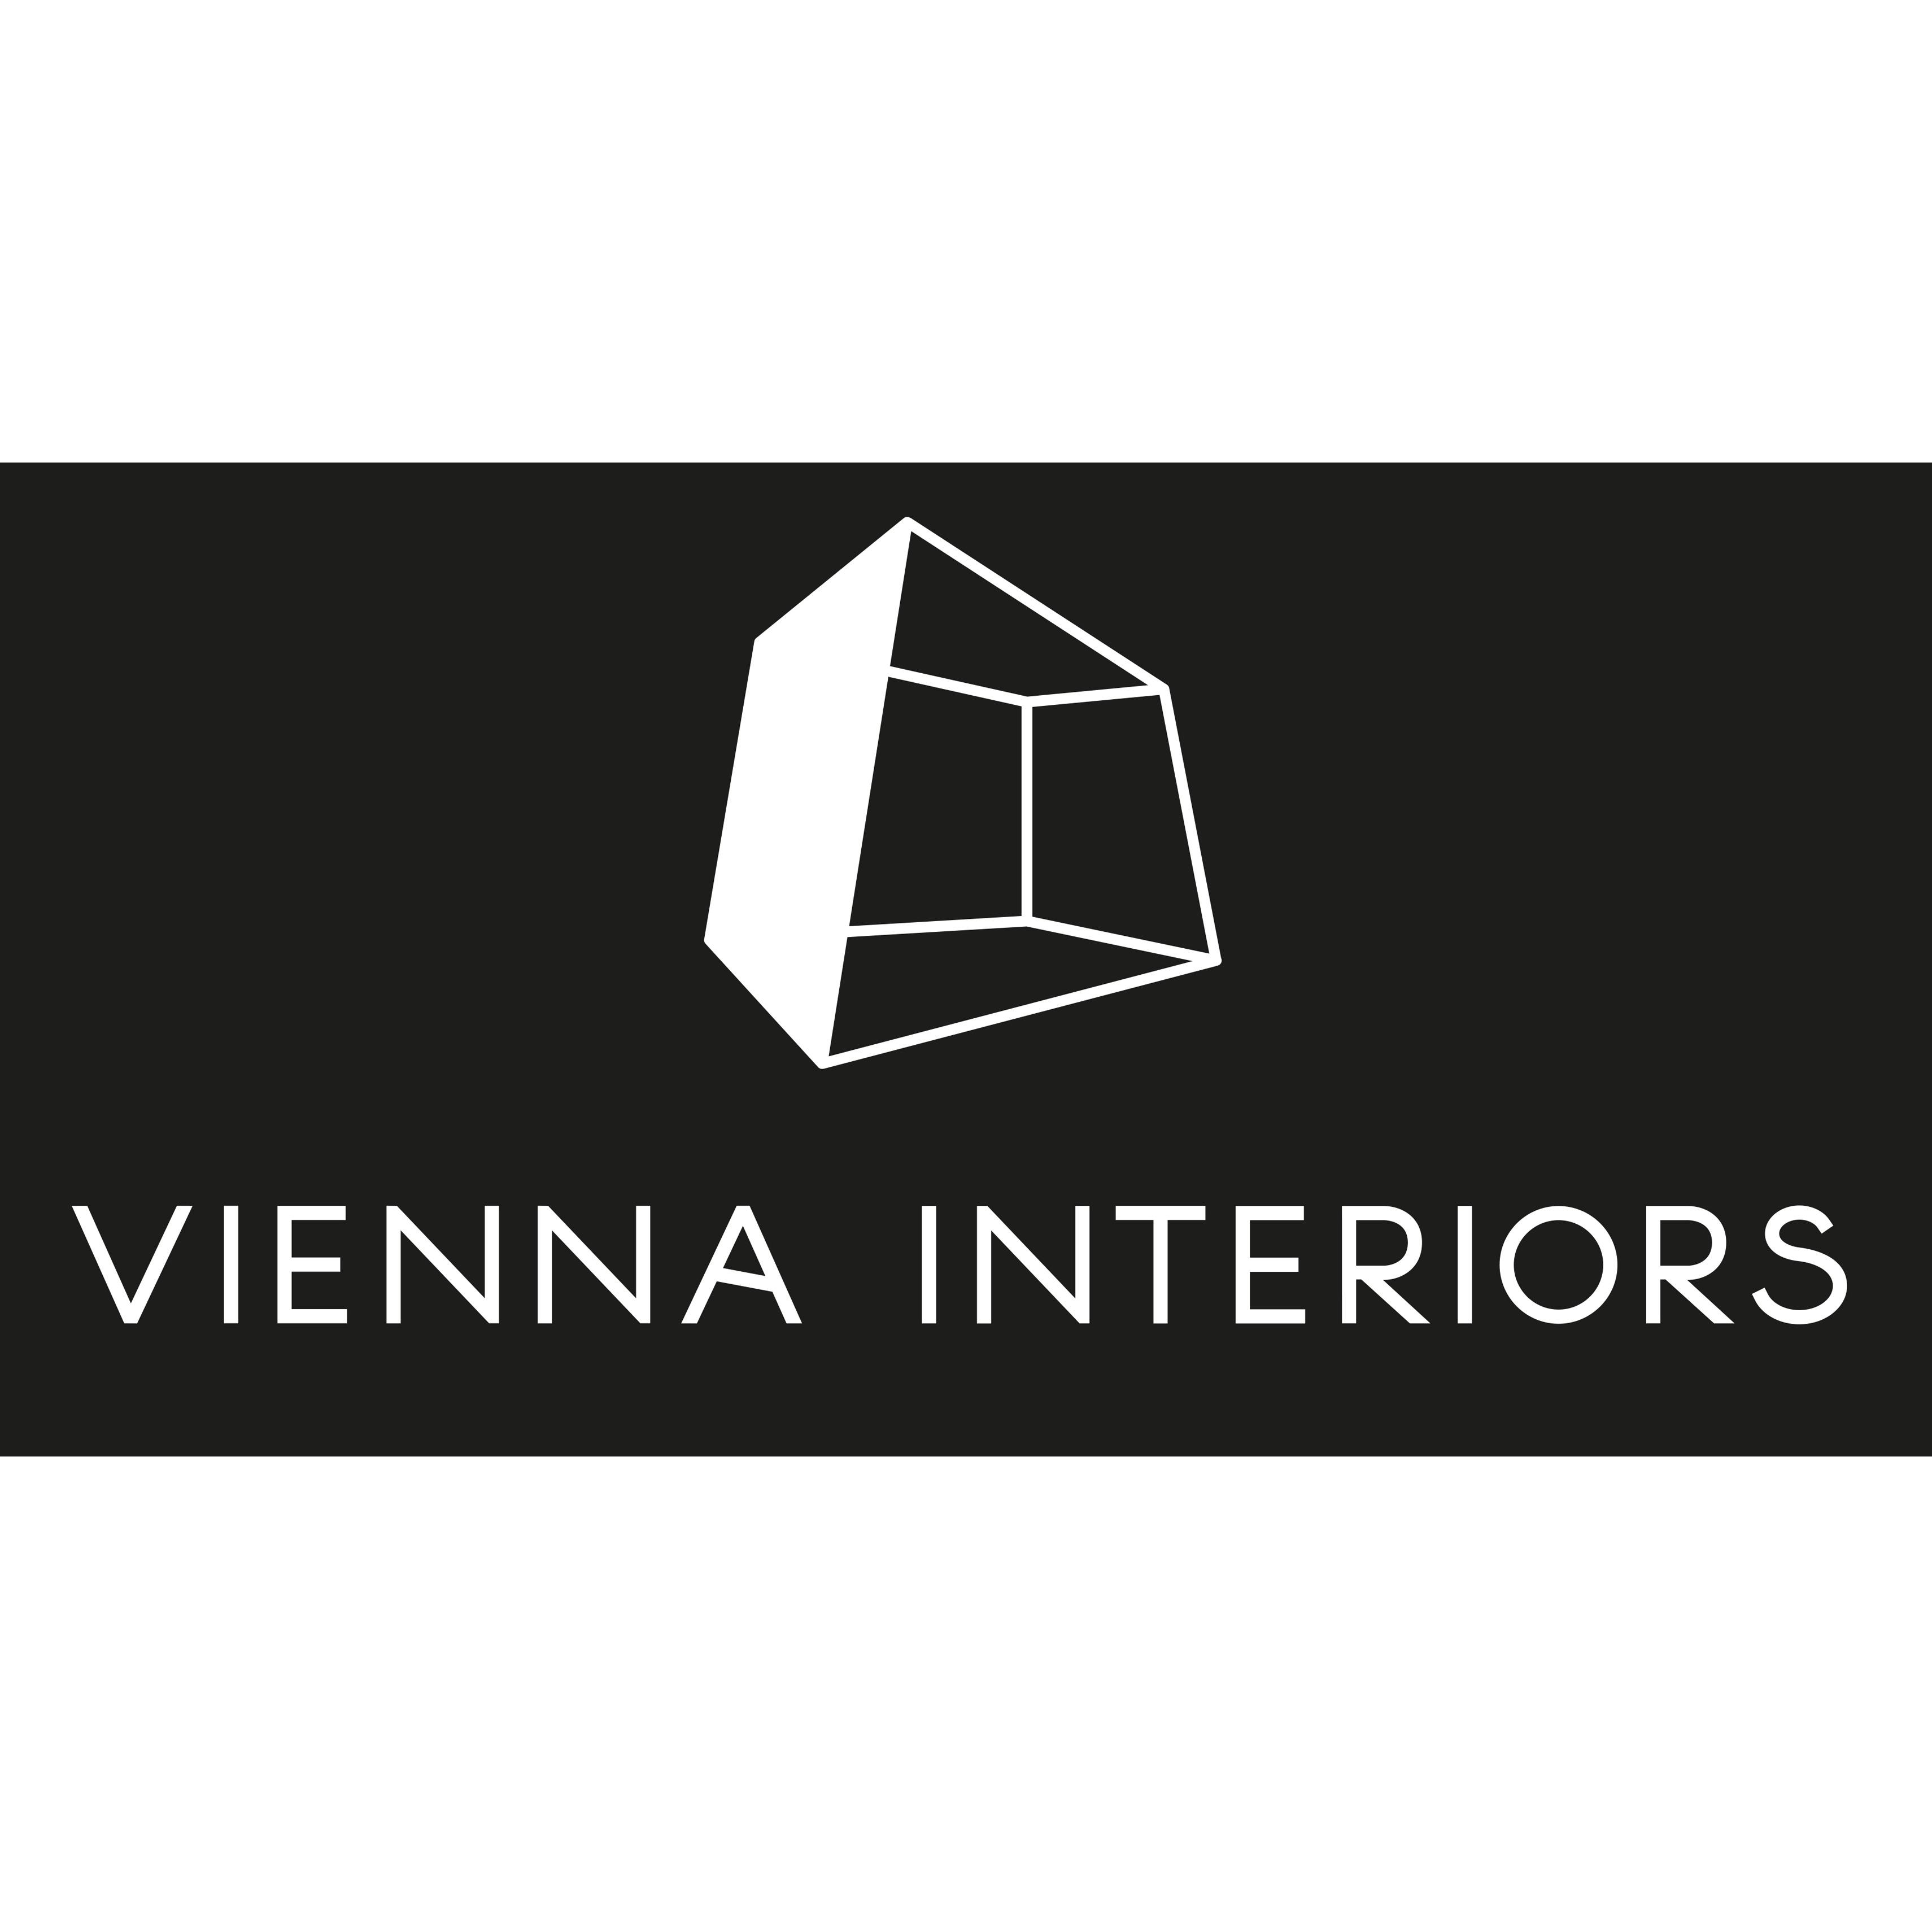 VIENNA INTERIORS Maier & Pohl GmbH Logo